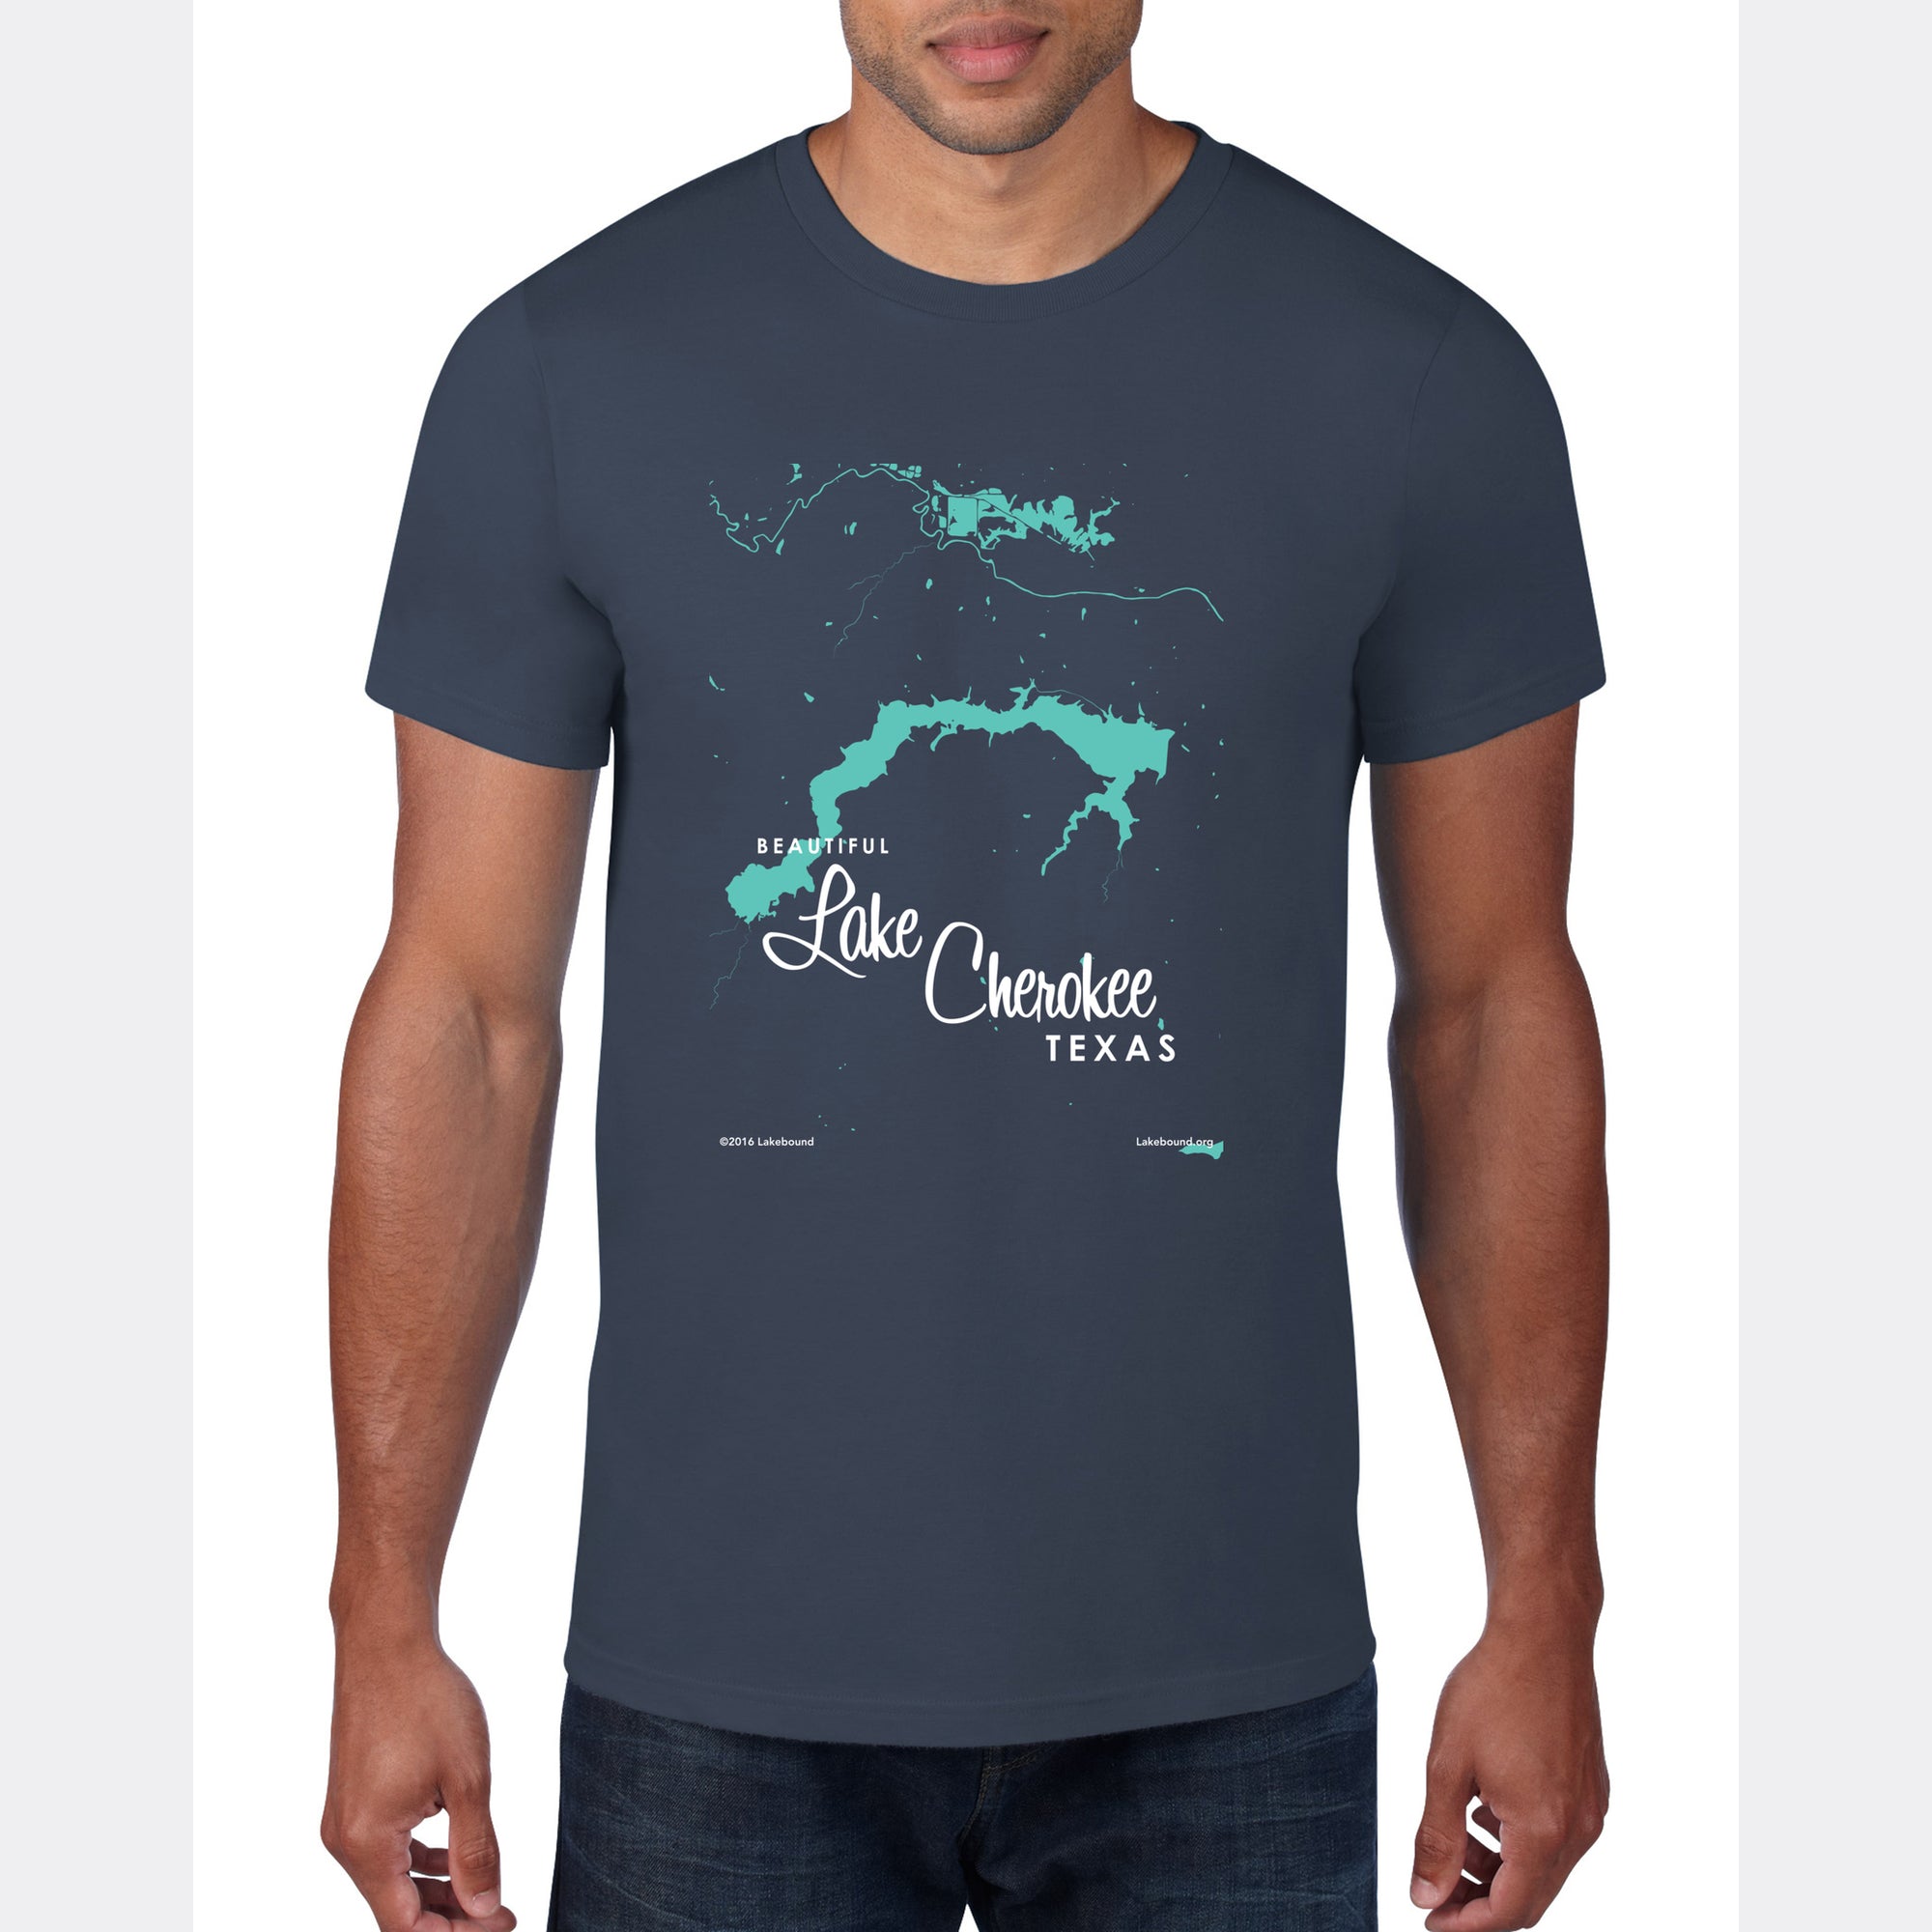 Lake Cherokee Texas, T-Shirt